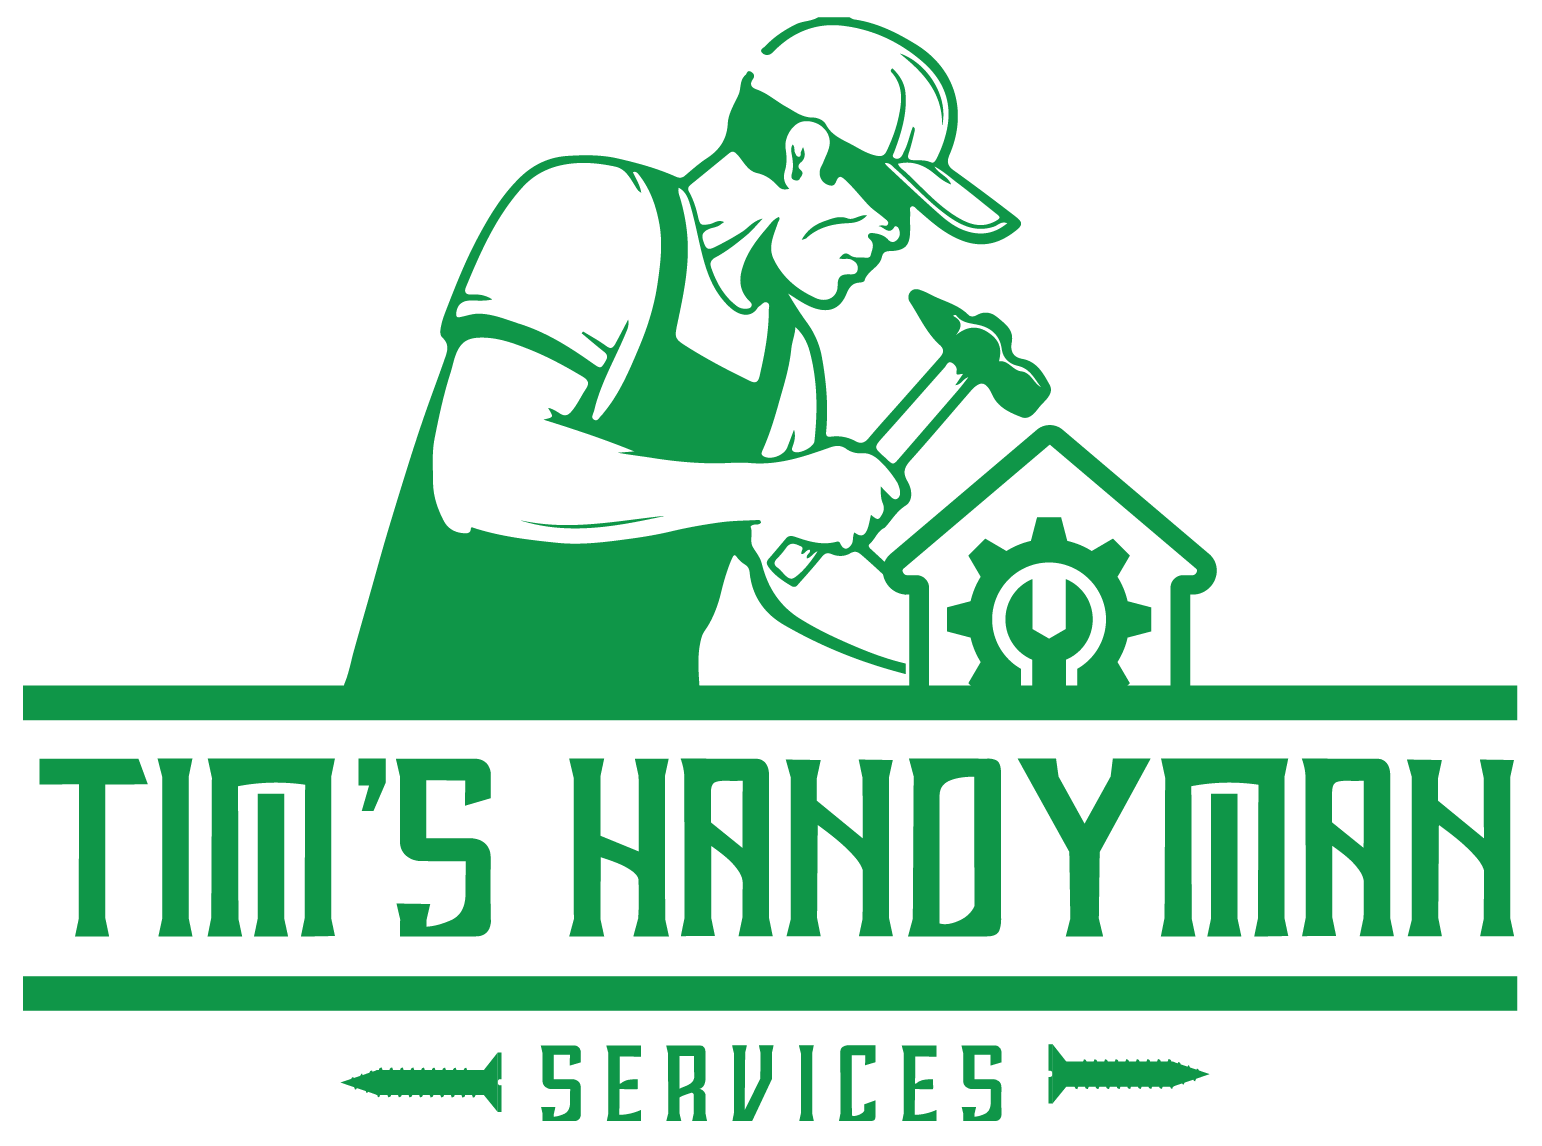 Tim's Handyman